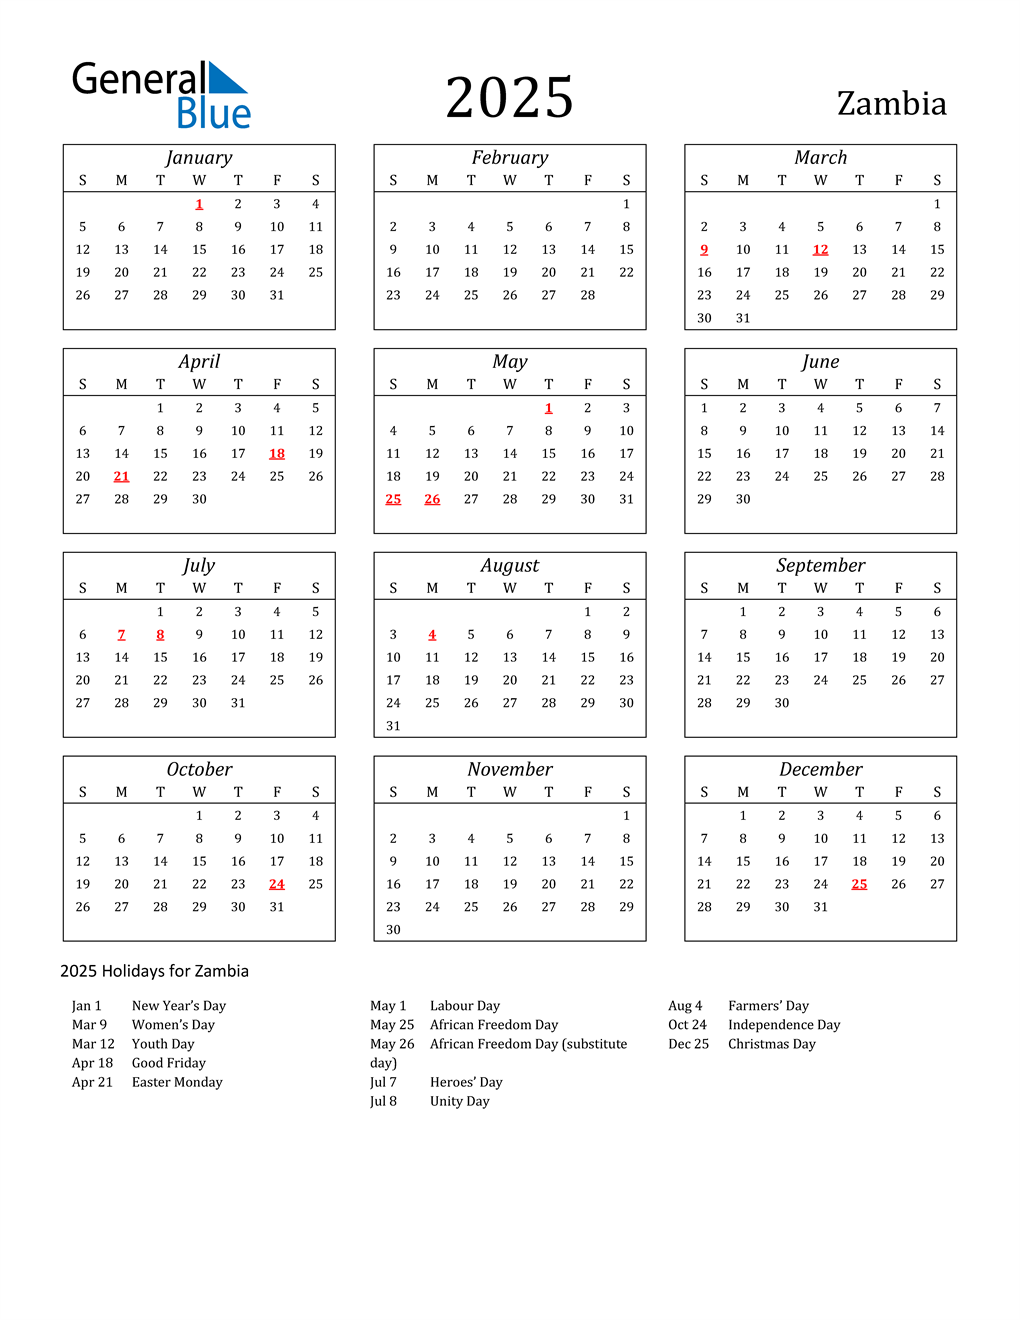 2025 Zambia Calendar with Holidays